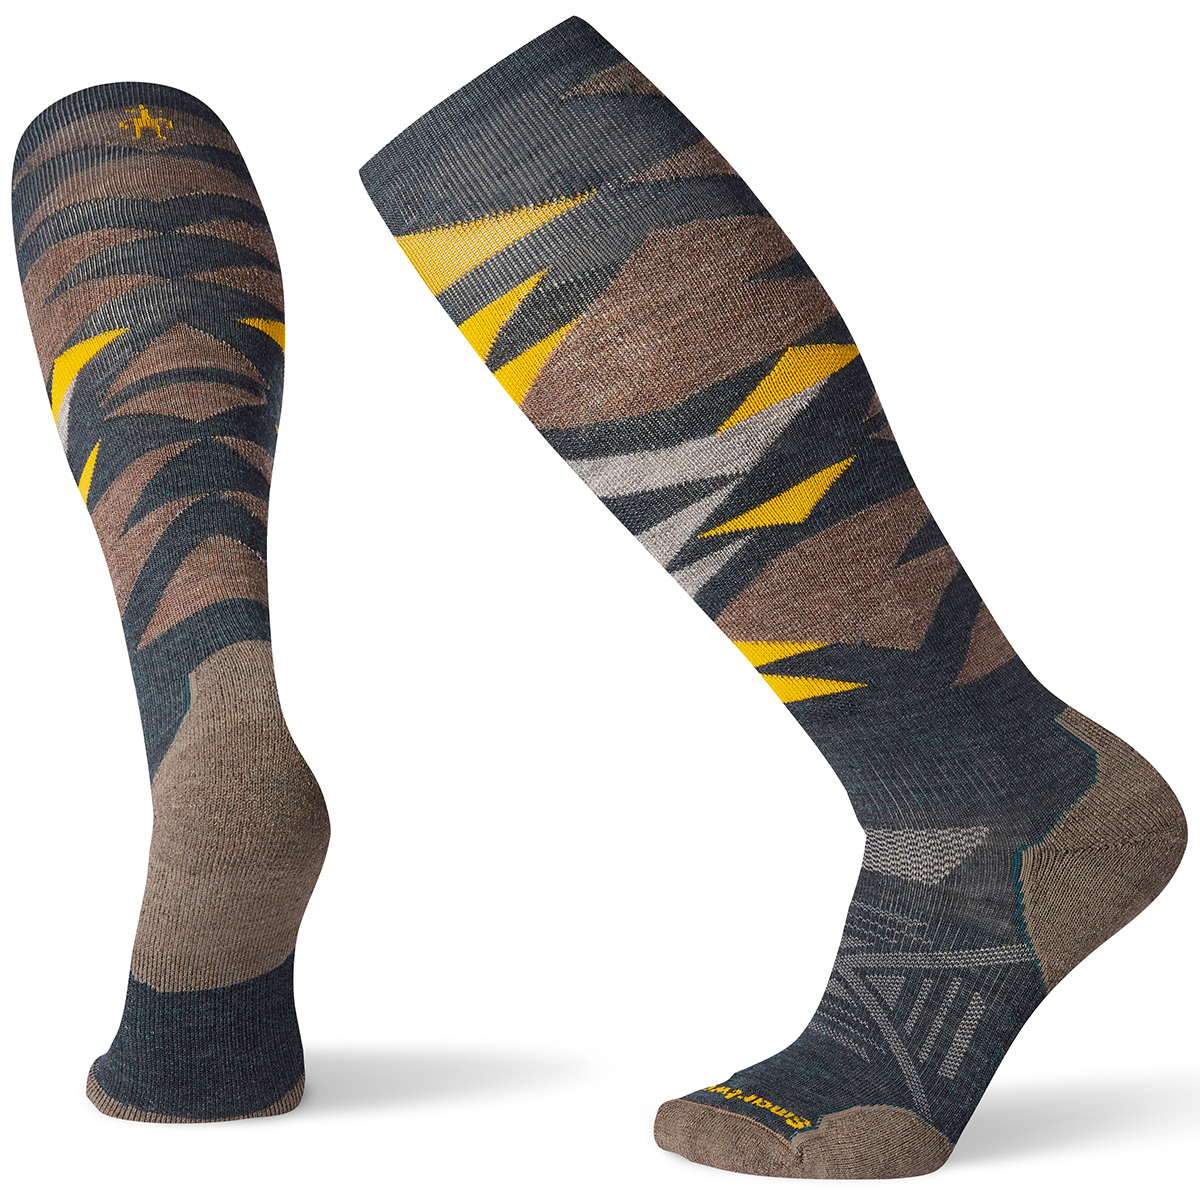 Smartwool Men's Phd Ski Light Pattern Socks - Various Patterns, L